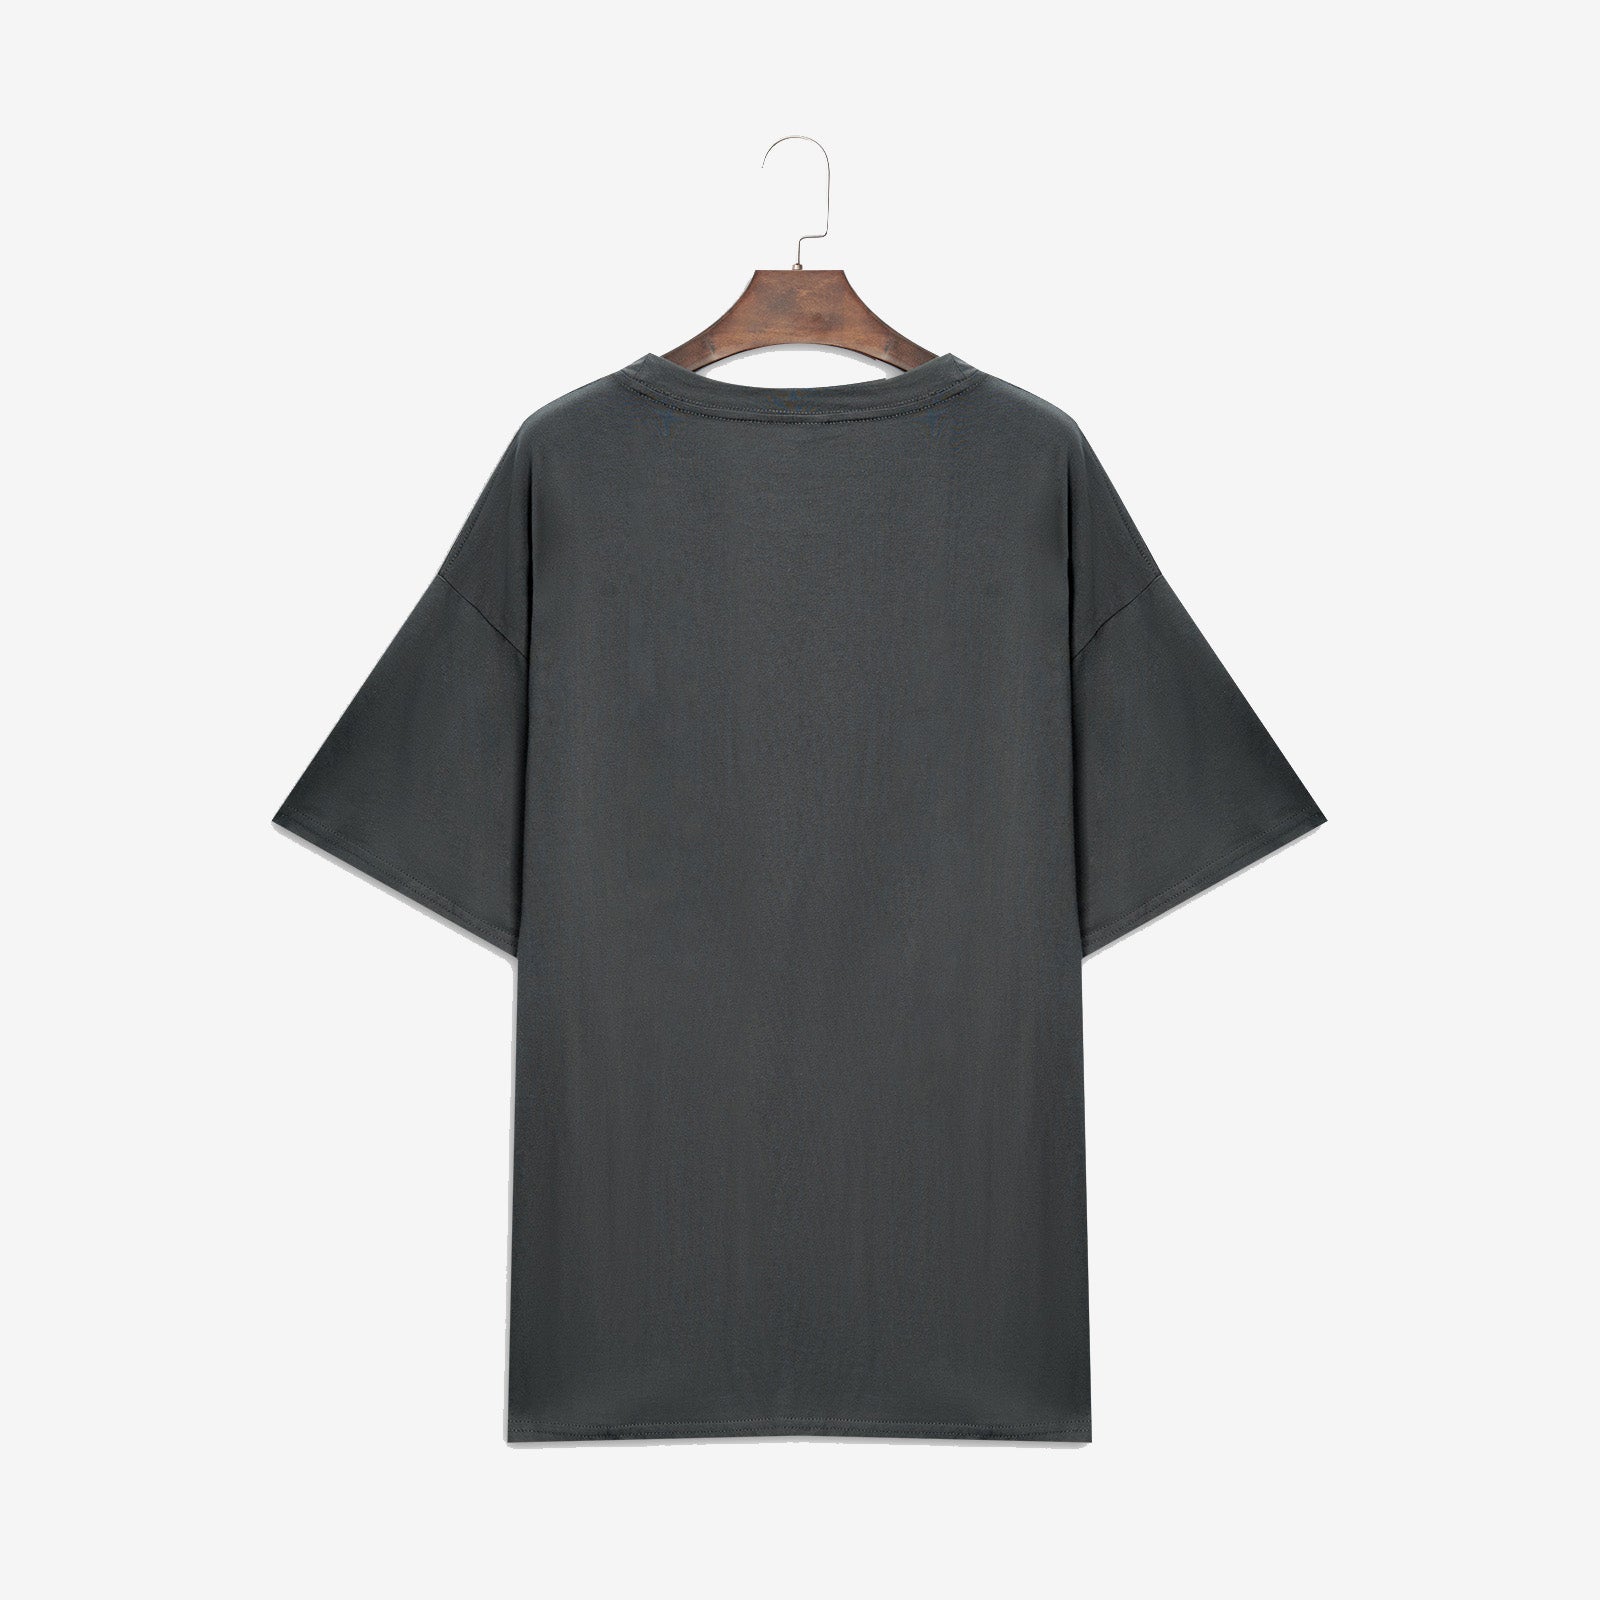 Neojana Fashion Sun Moon Phases Print T-Shirt - Chicyea